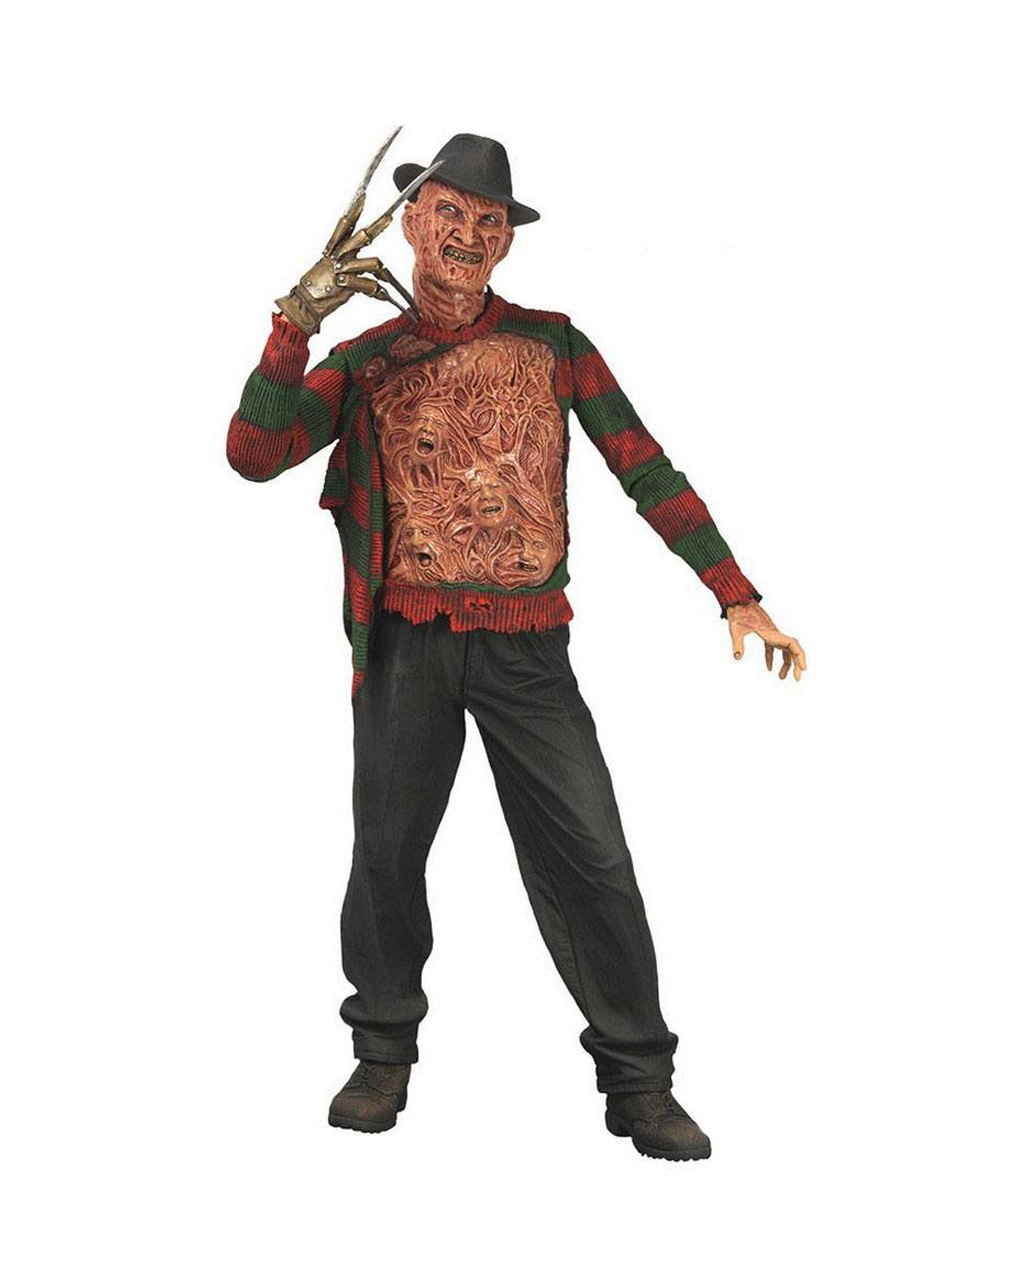 Elm Street Freddy Krueger Action Figure